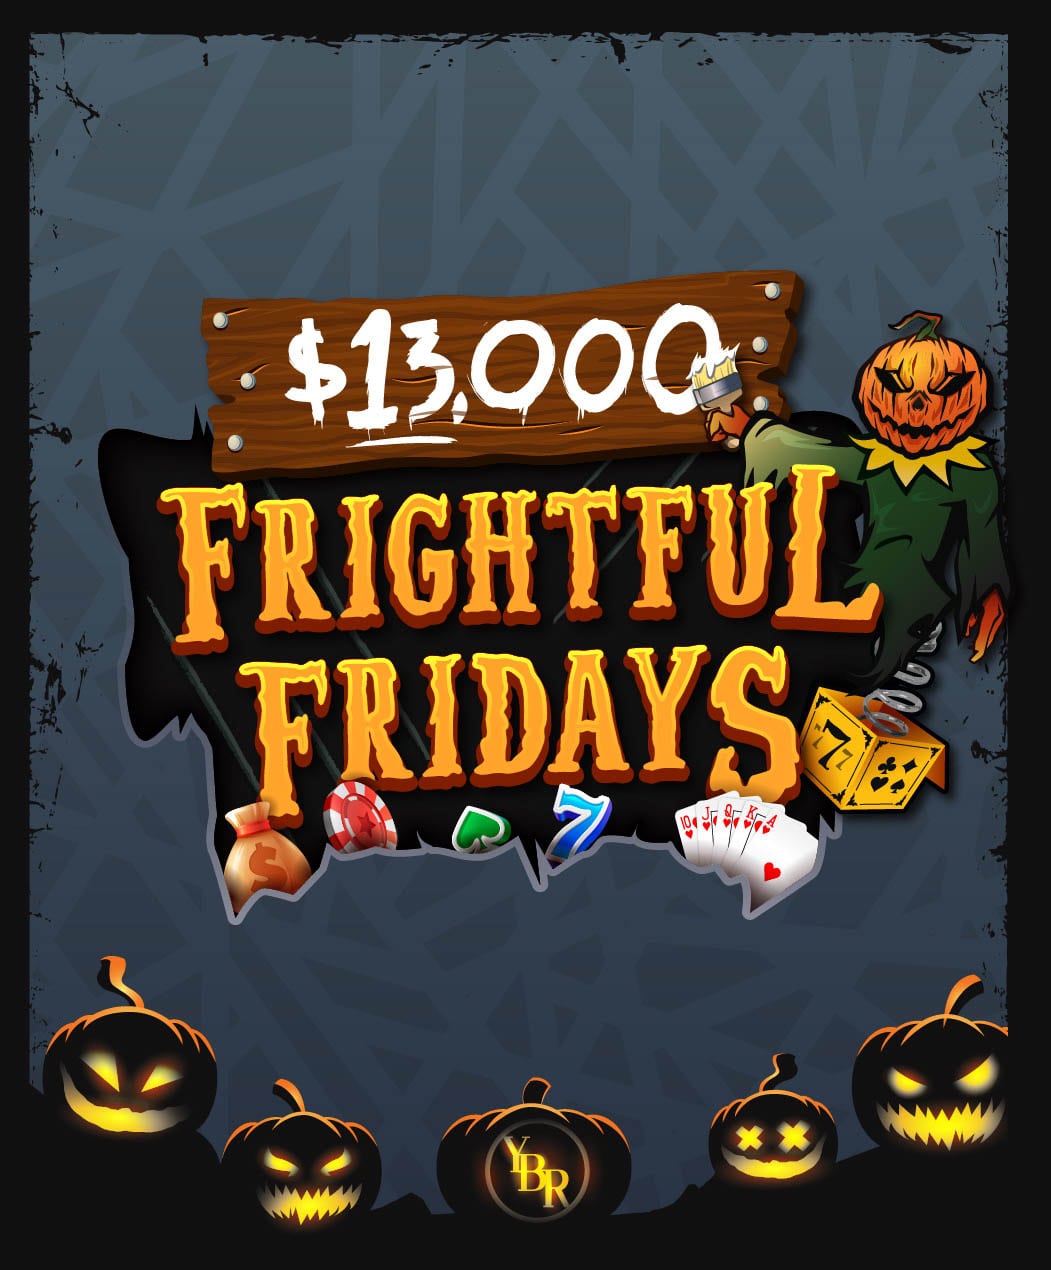 13,000 Frightful Fridays